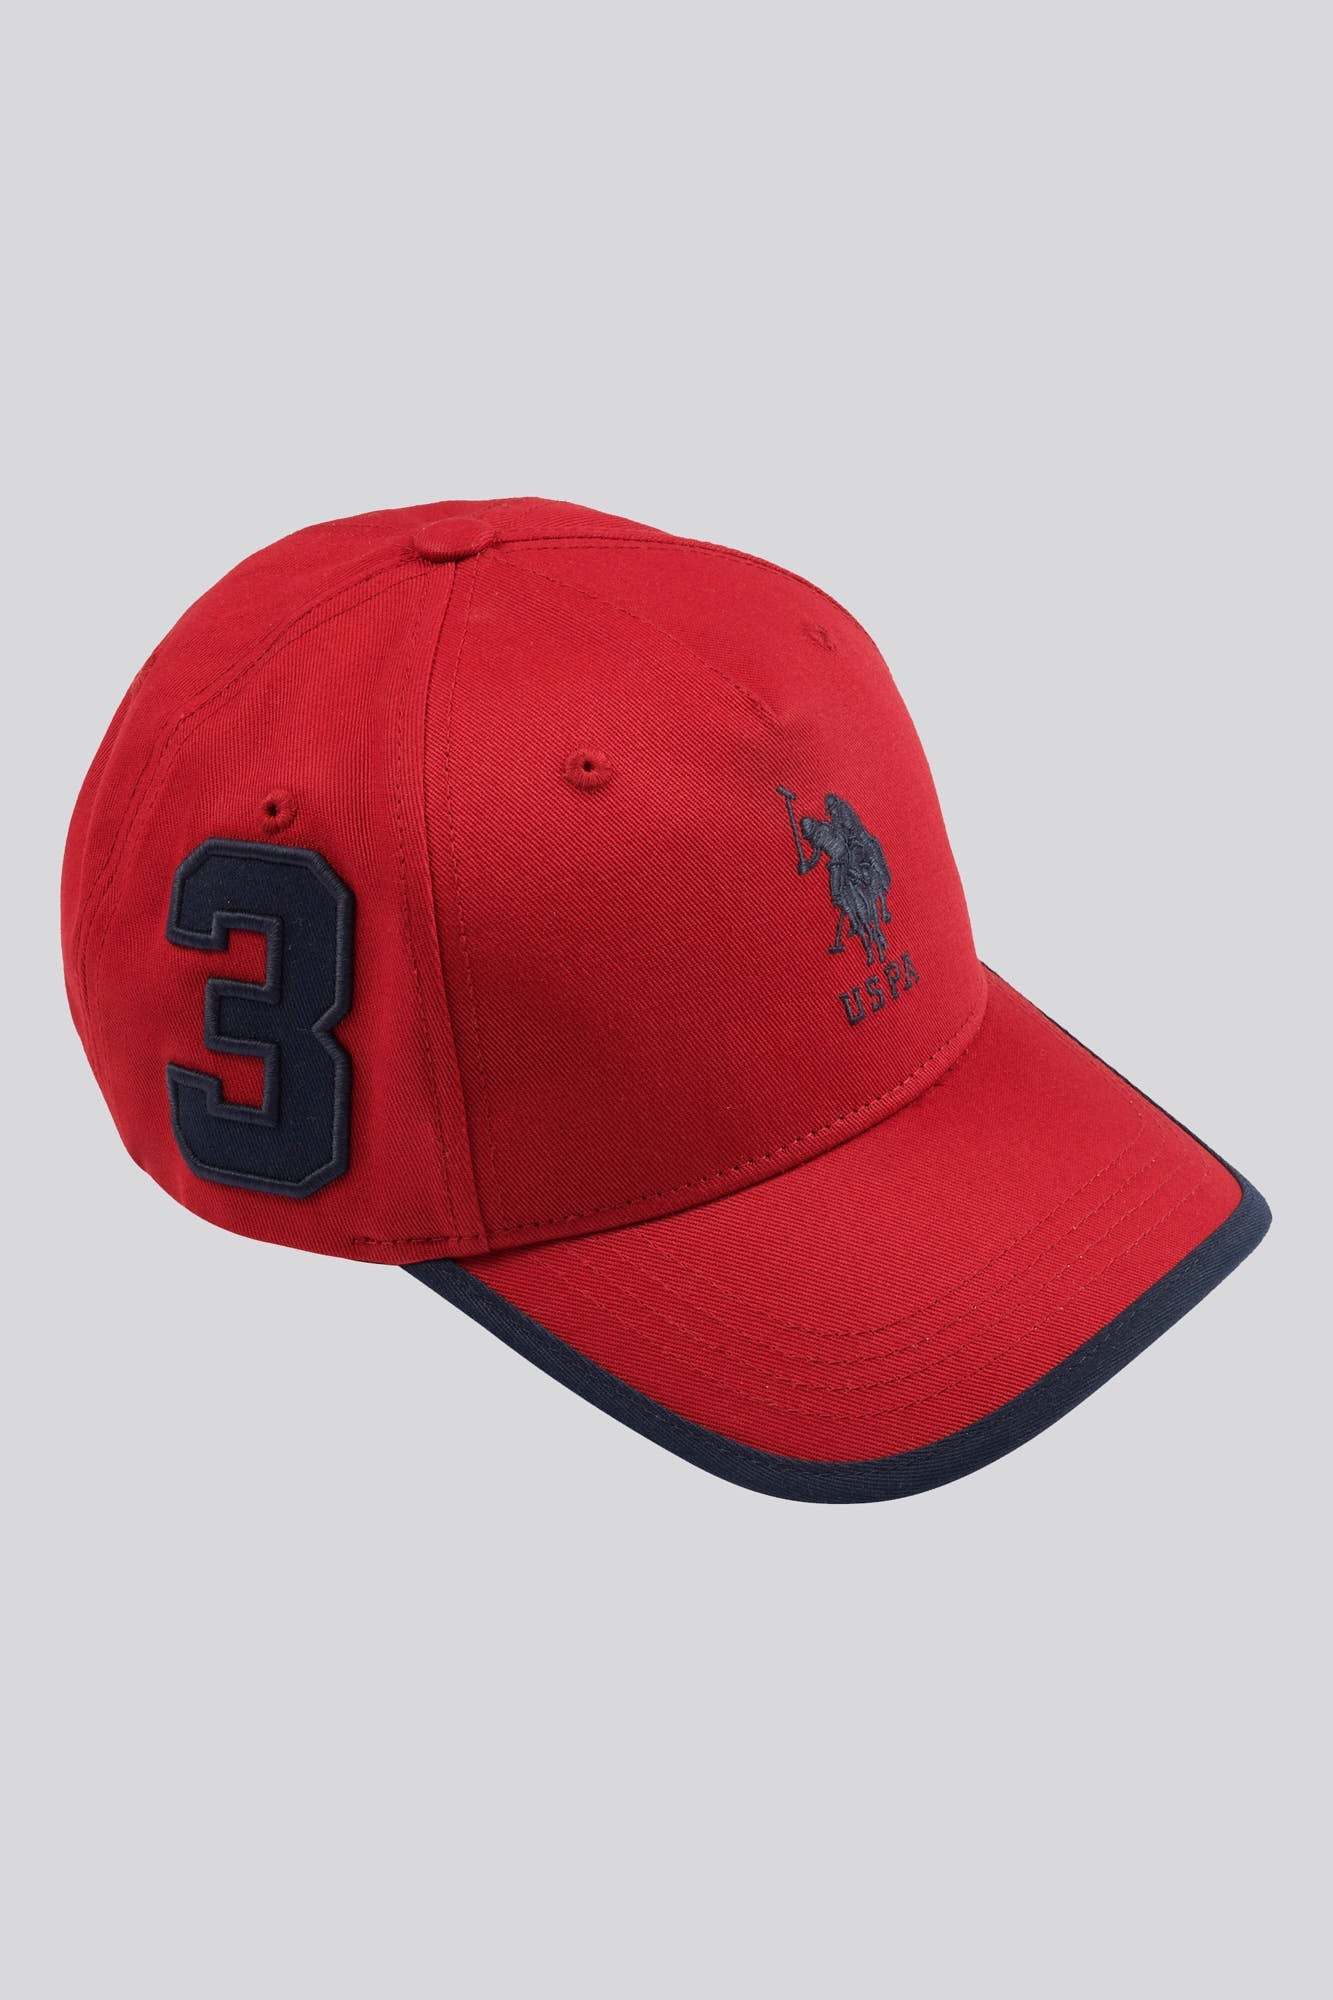 U.S. Polo Assn. Mens Player 3 Baseball Cap in Haute Red